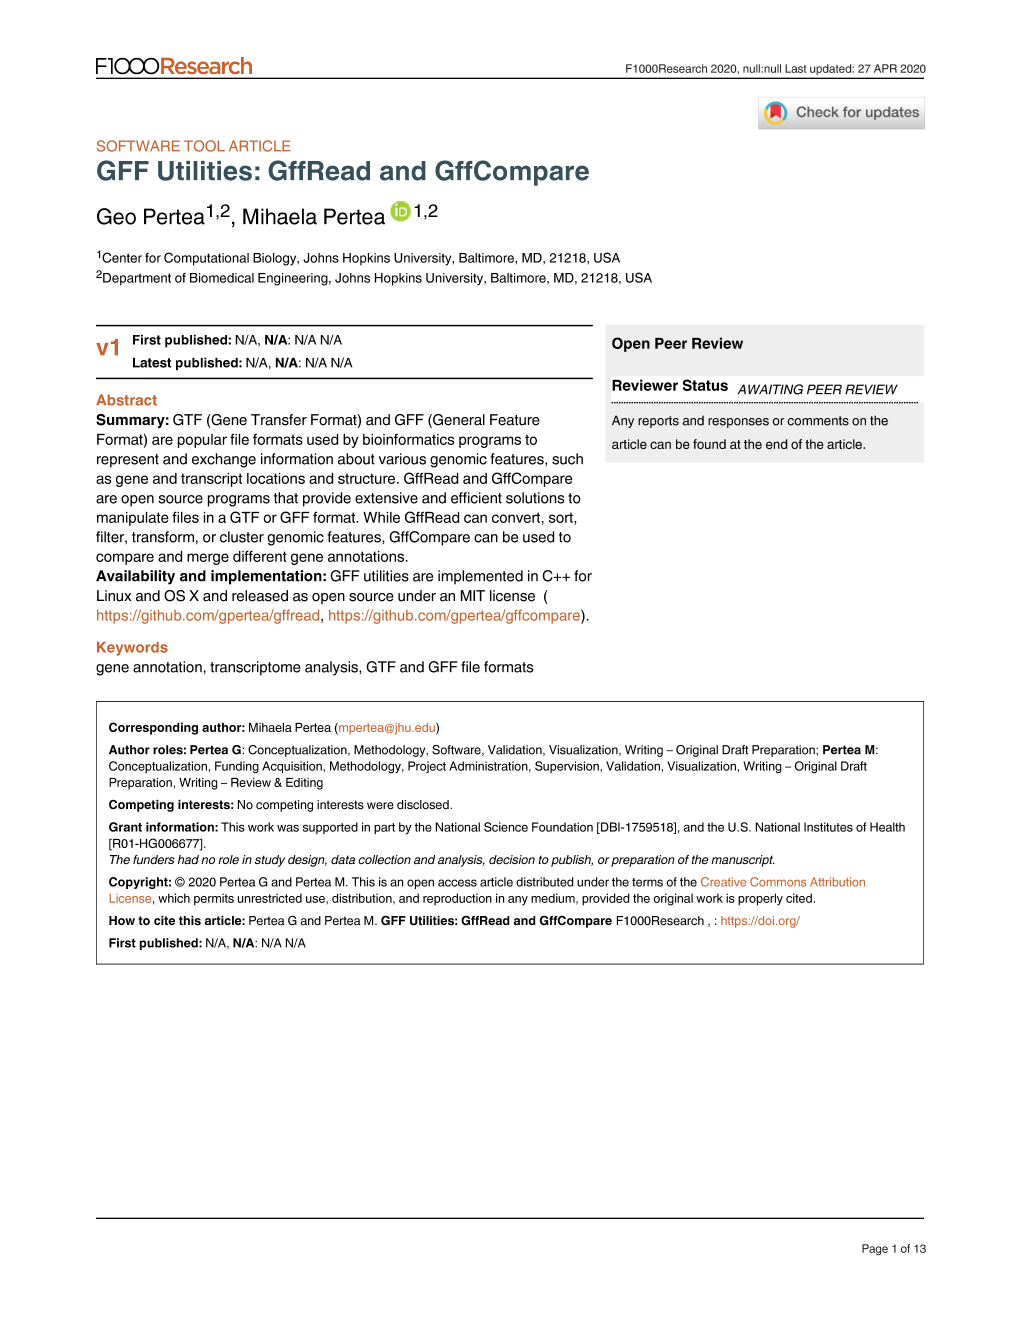 GFF Utilities: Gffread and Gffcompare